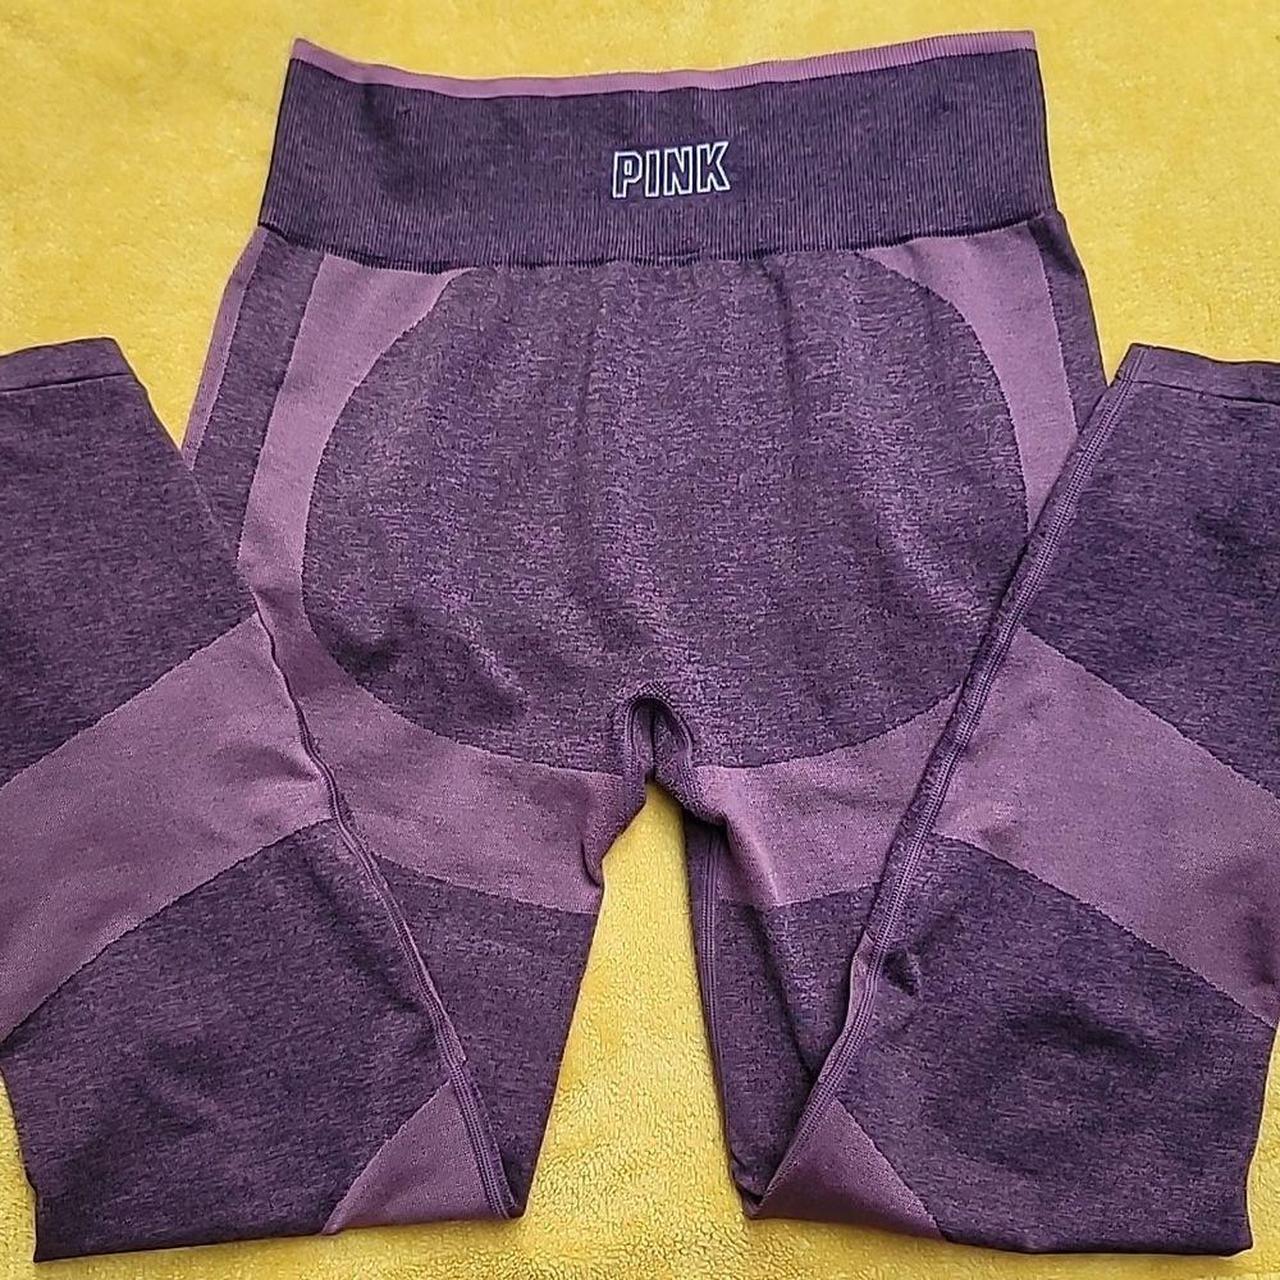 Victoria secrets Purple Seamless Leggings - size - Depop